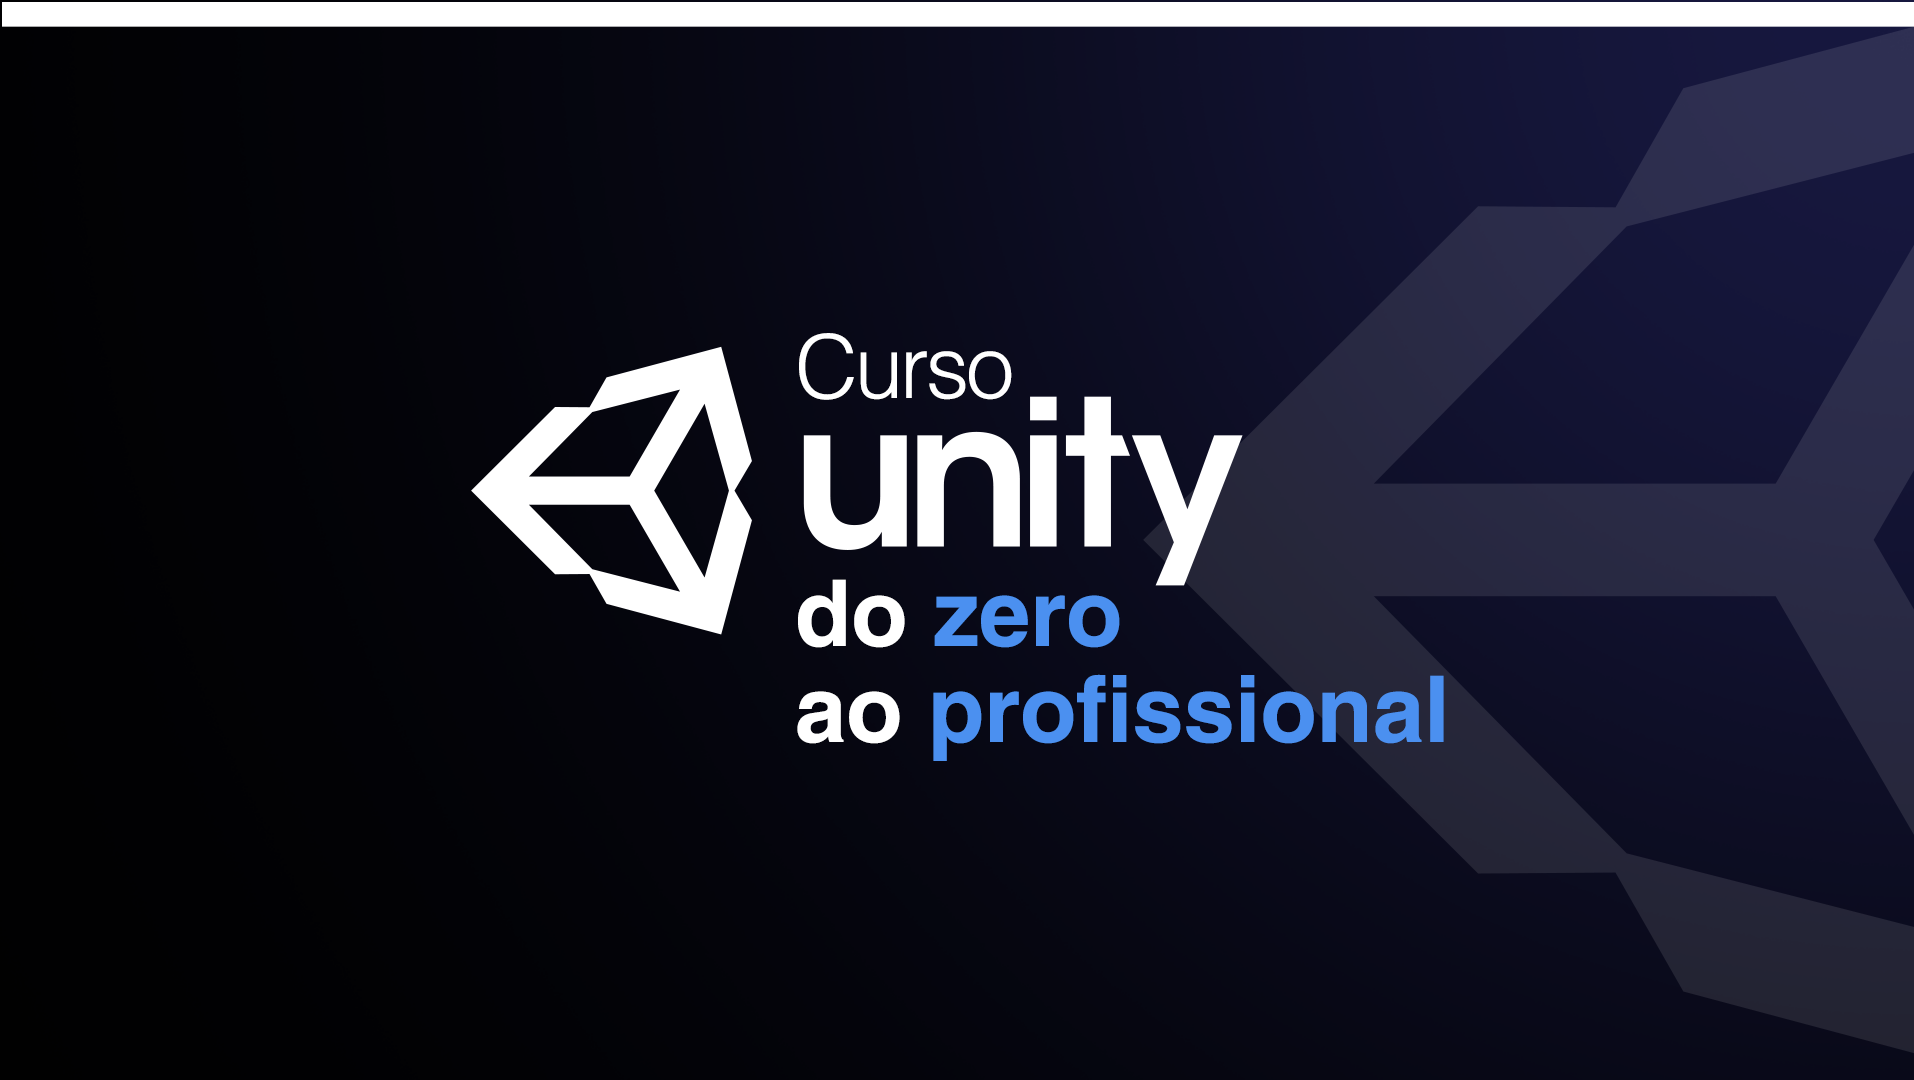 Curso Unity do Zero ao Profissional: Danki Code